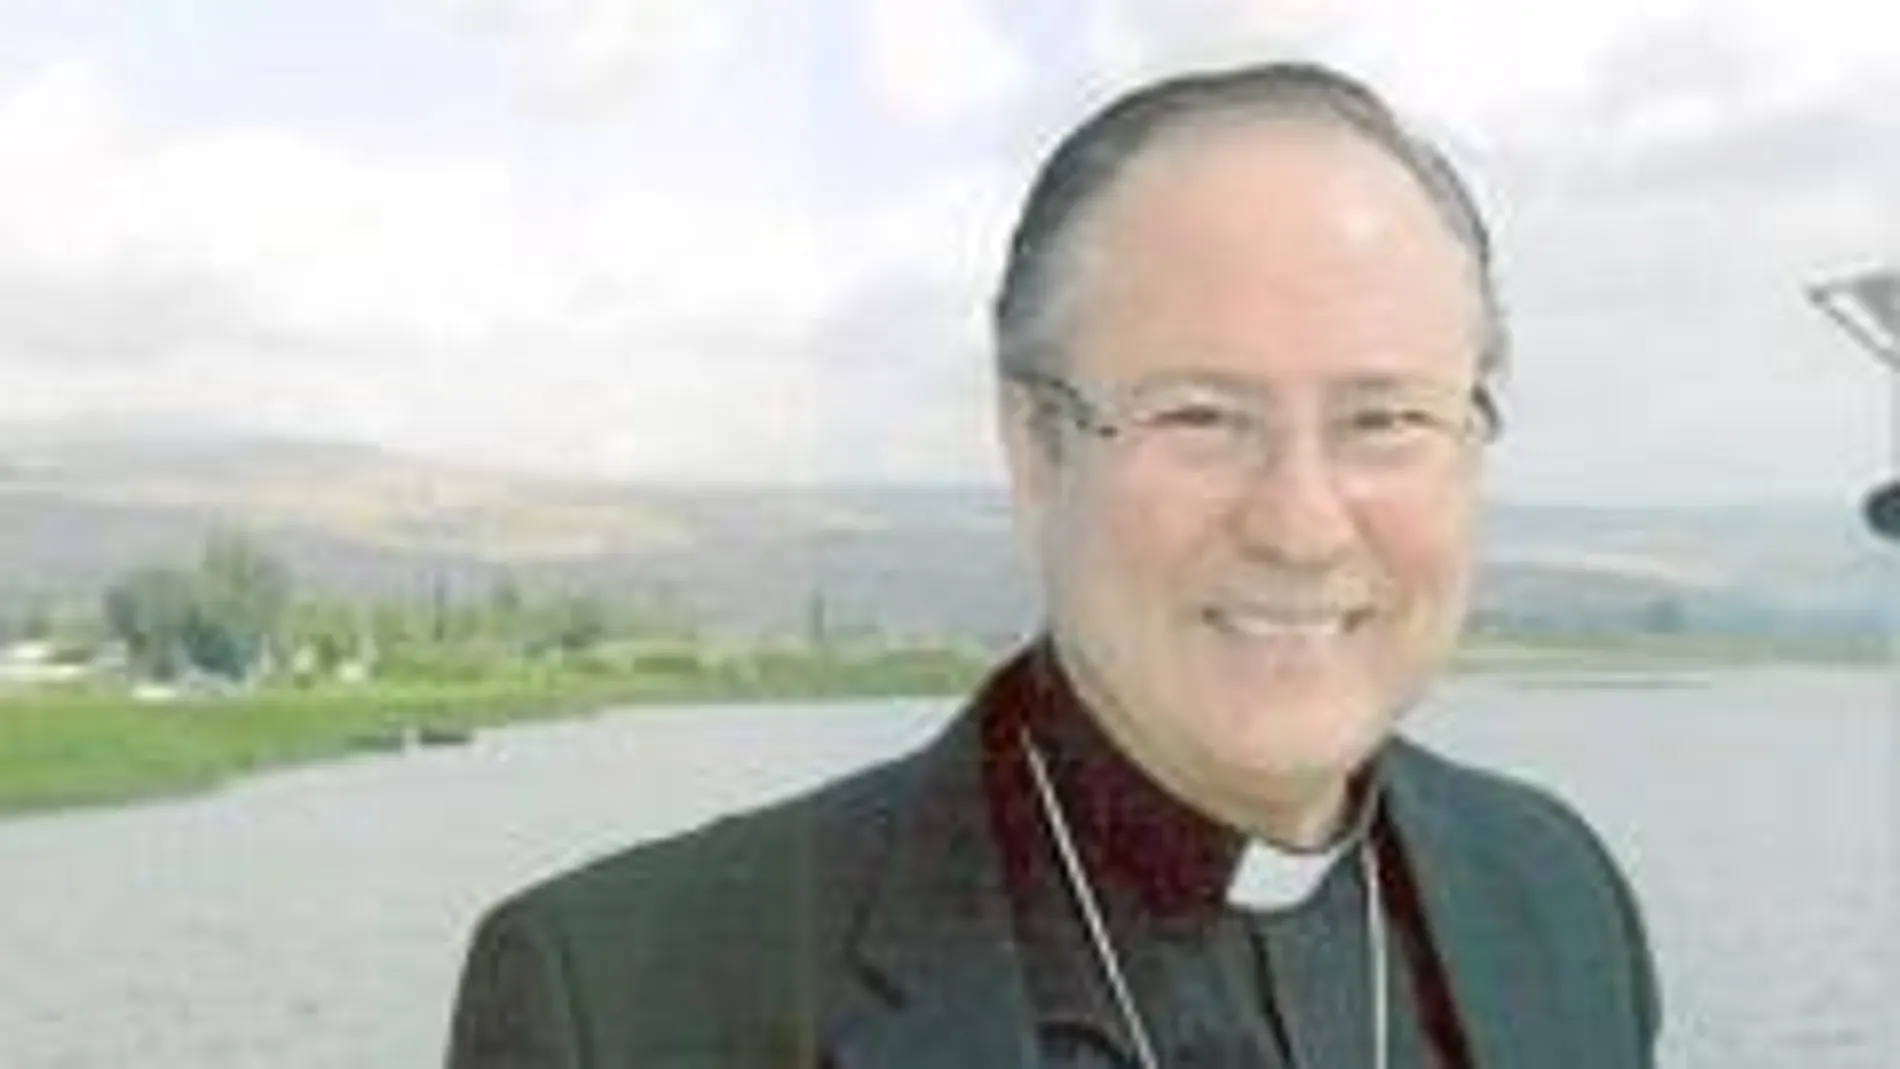 El nuevo obispo de Palencia, monseñor Esteban Escudero